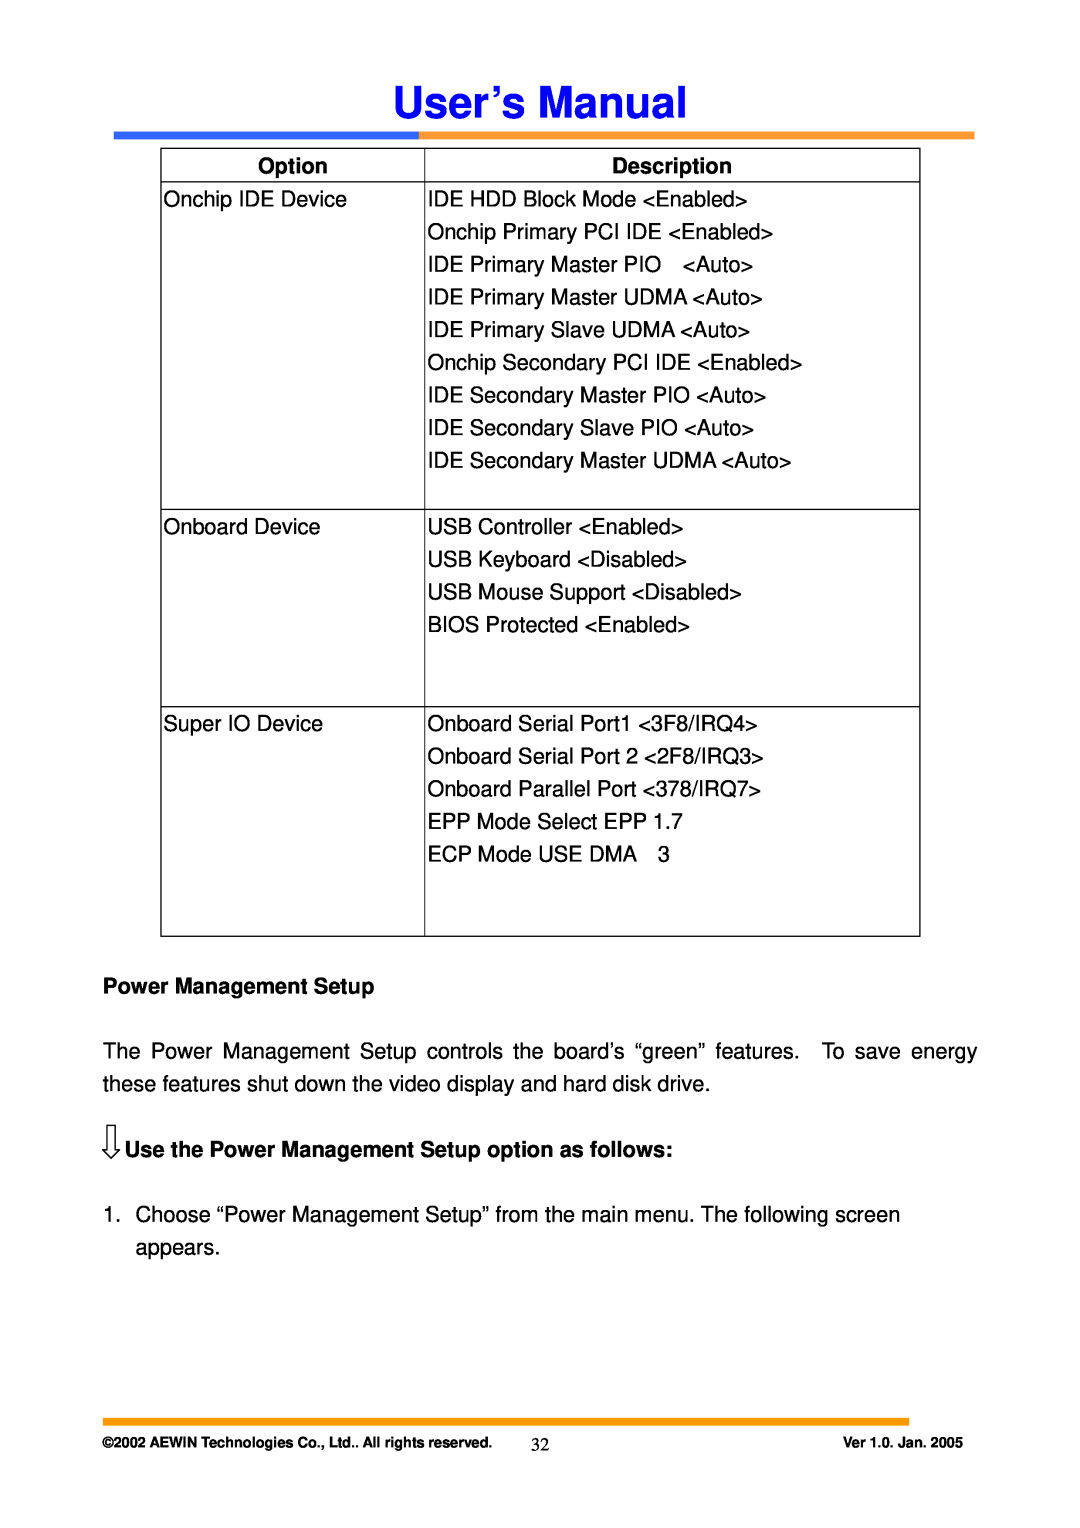 Intel AW-A795 user manual Use the Power Management Setup option as follows, User’s Manual, Option, Description 